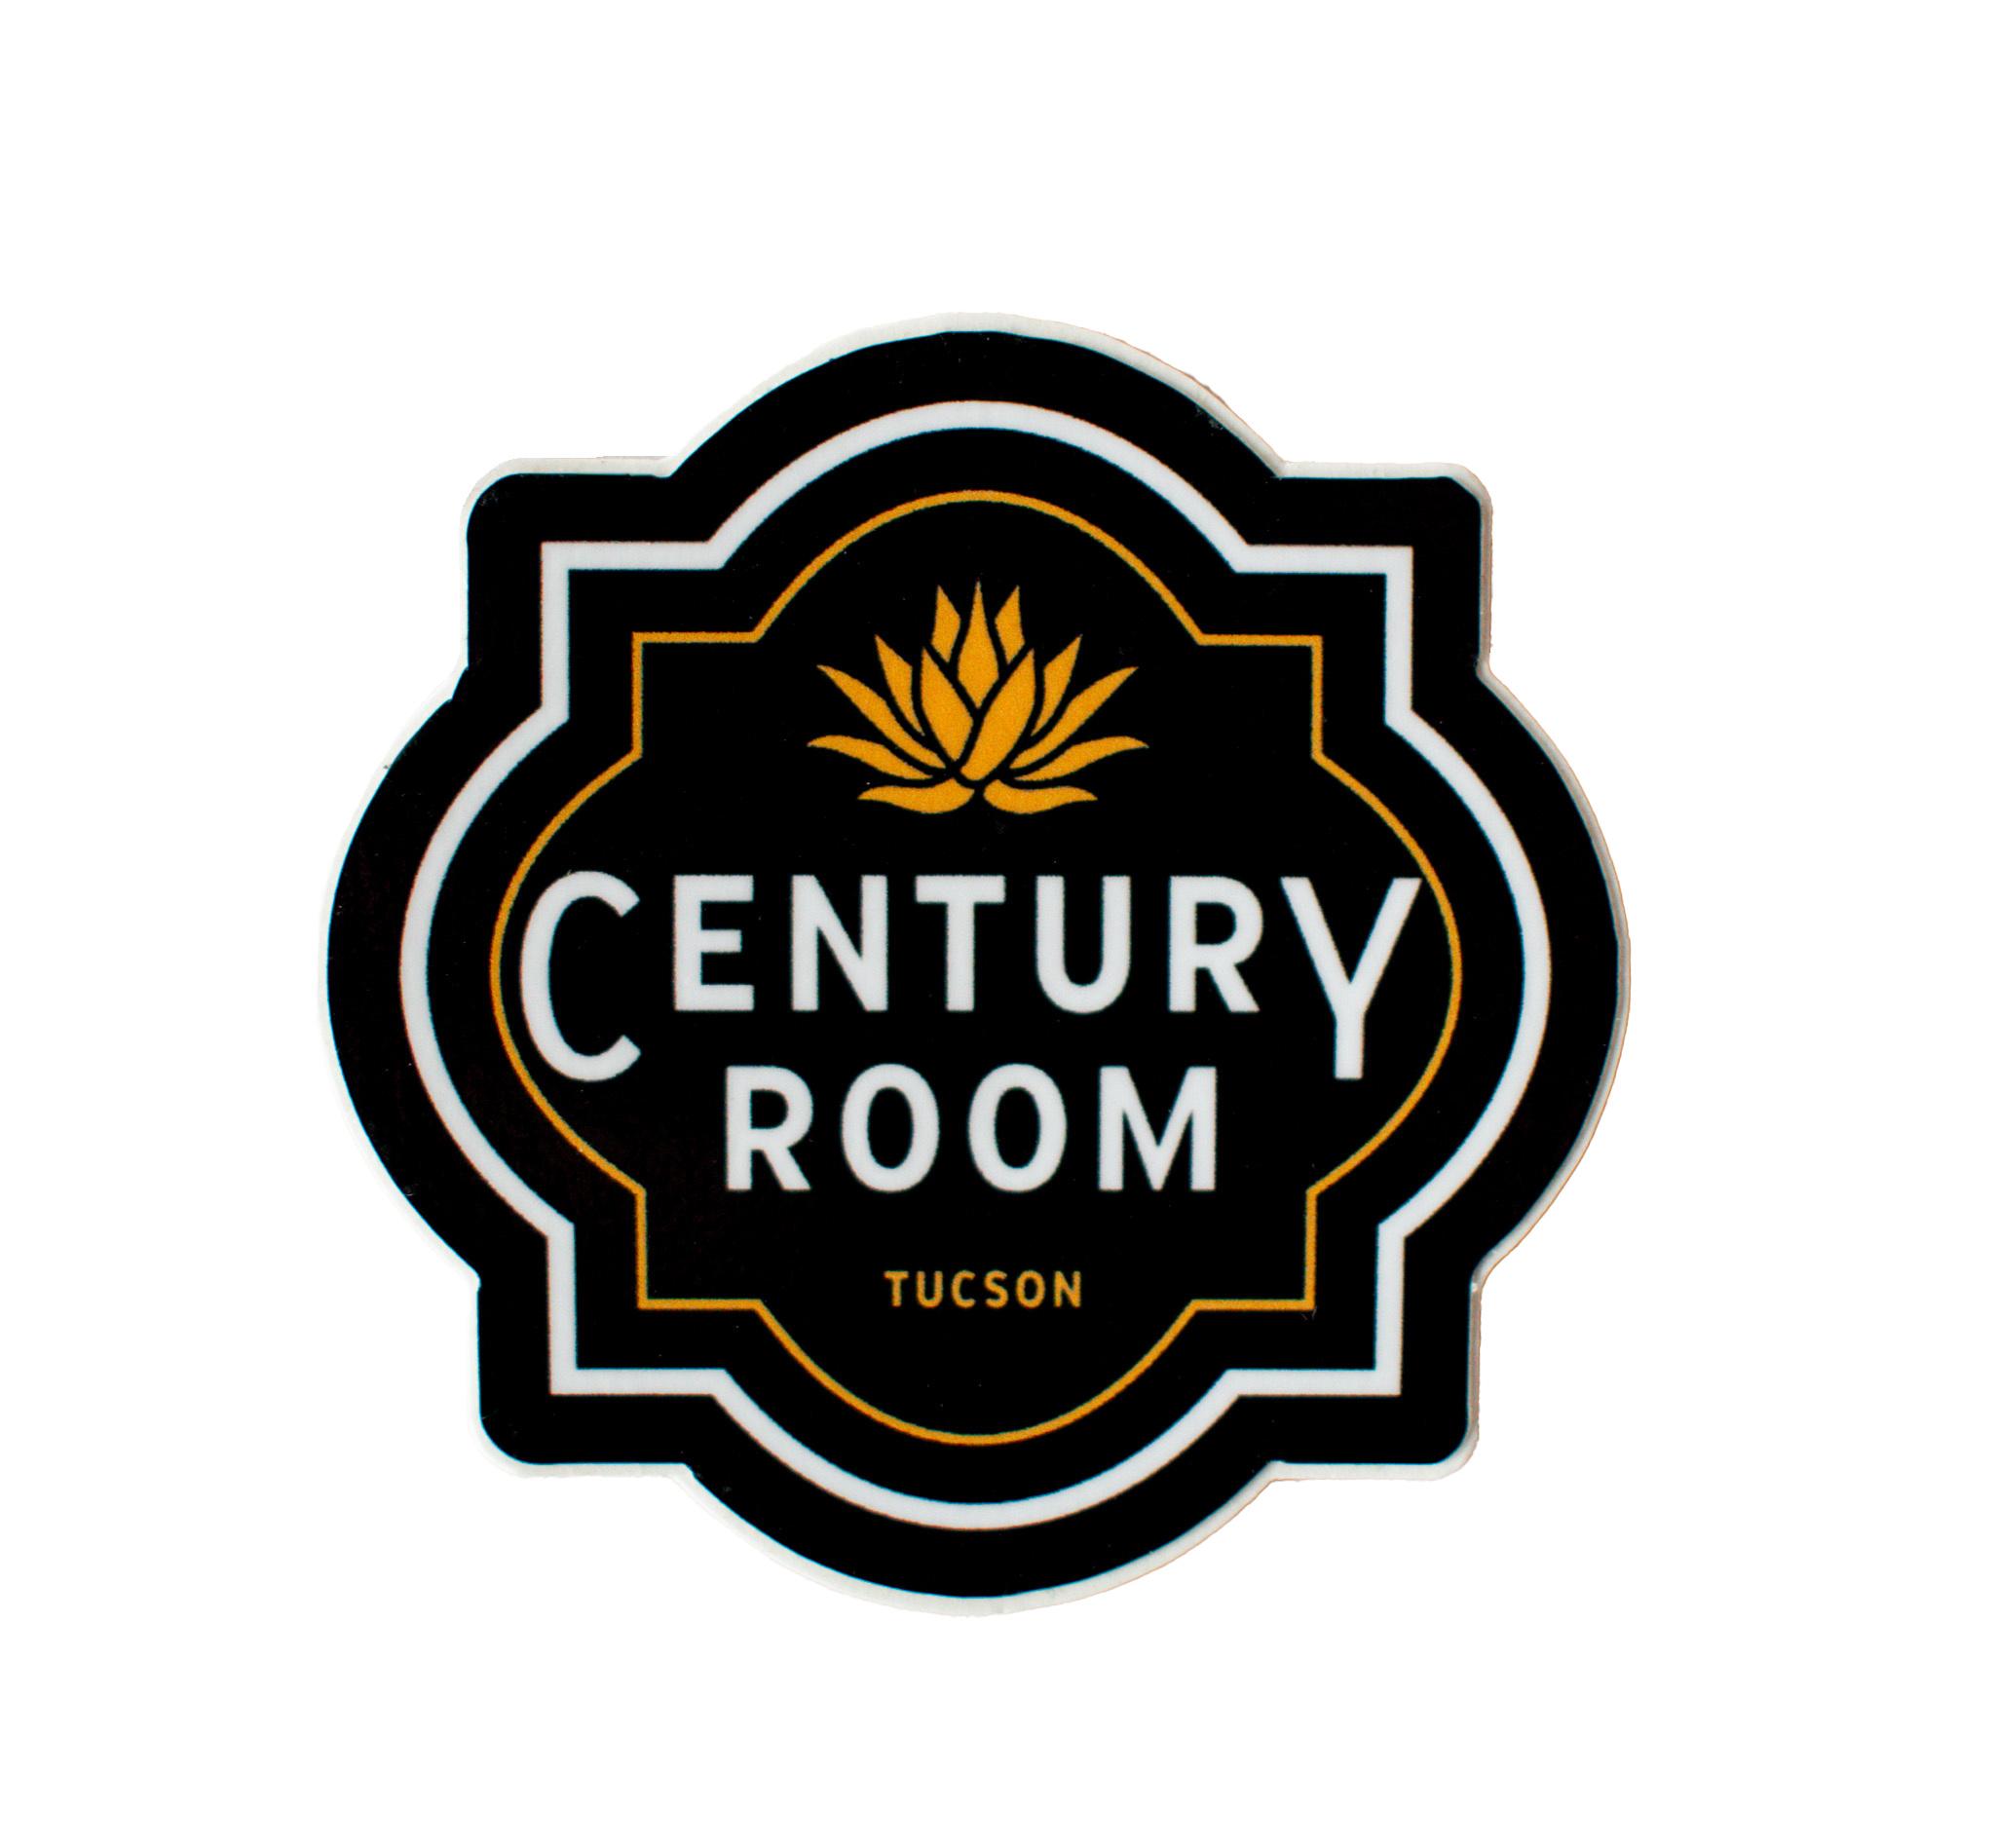 Large Century Room Sticker